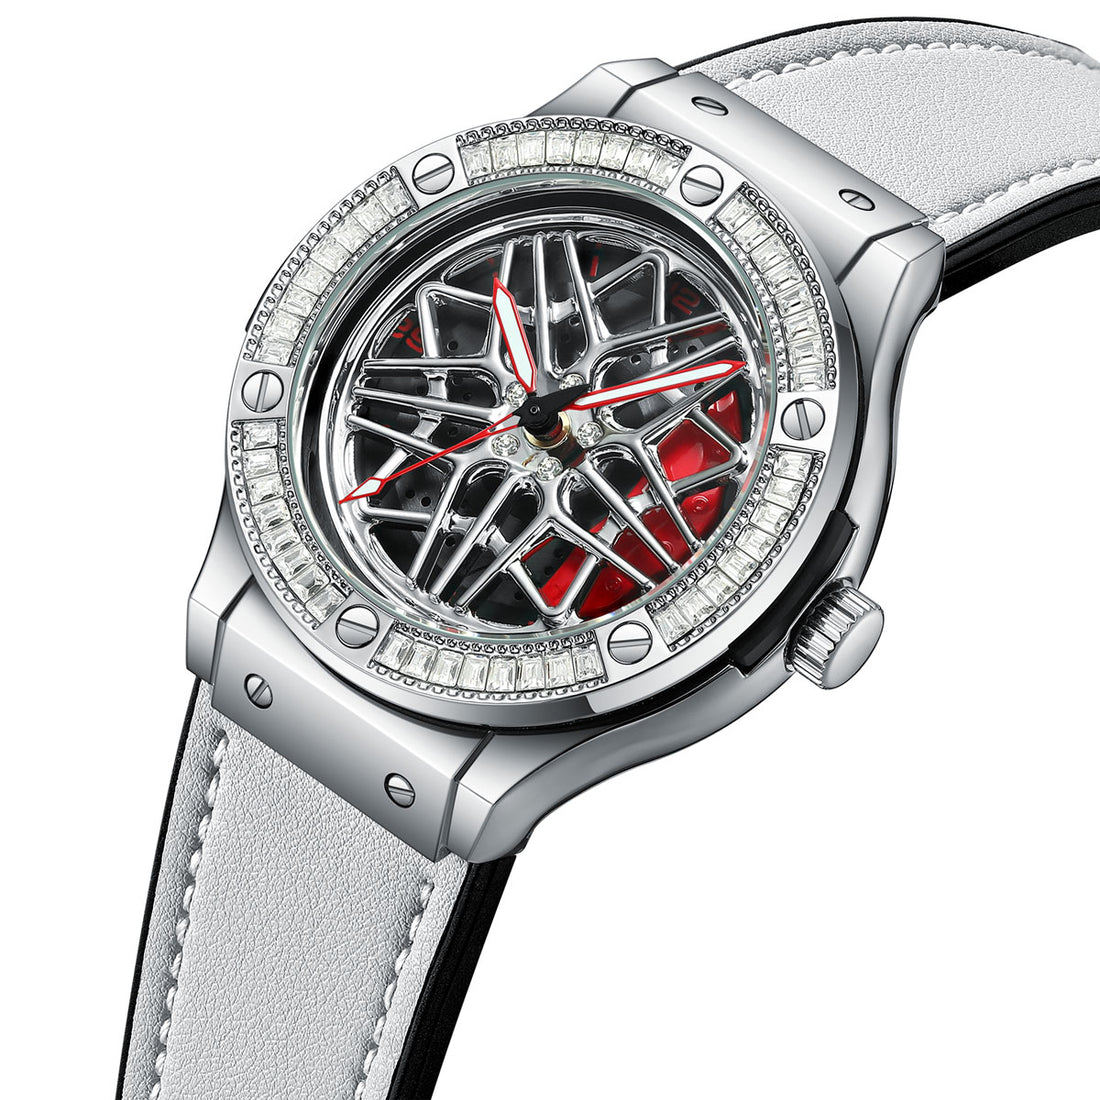 HMN S6 Diamond Lady Watch